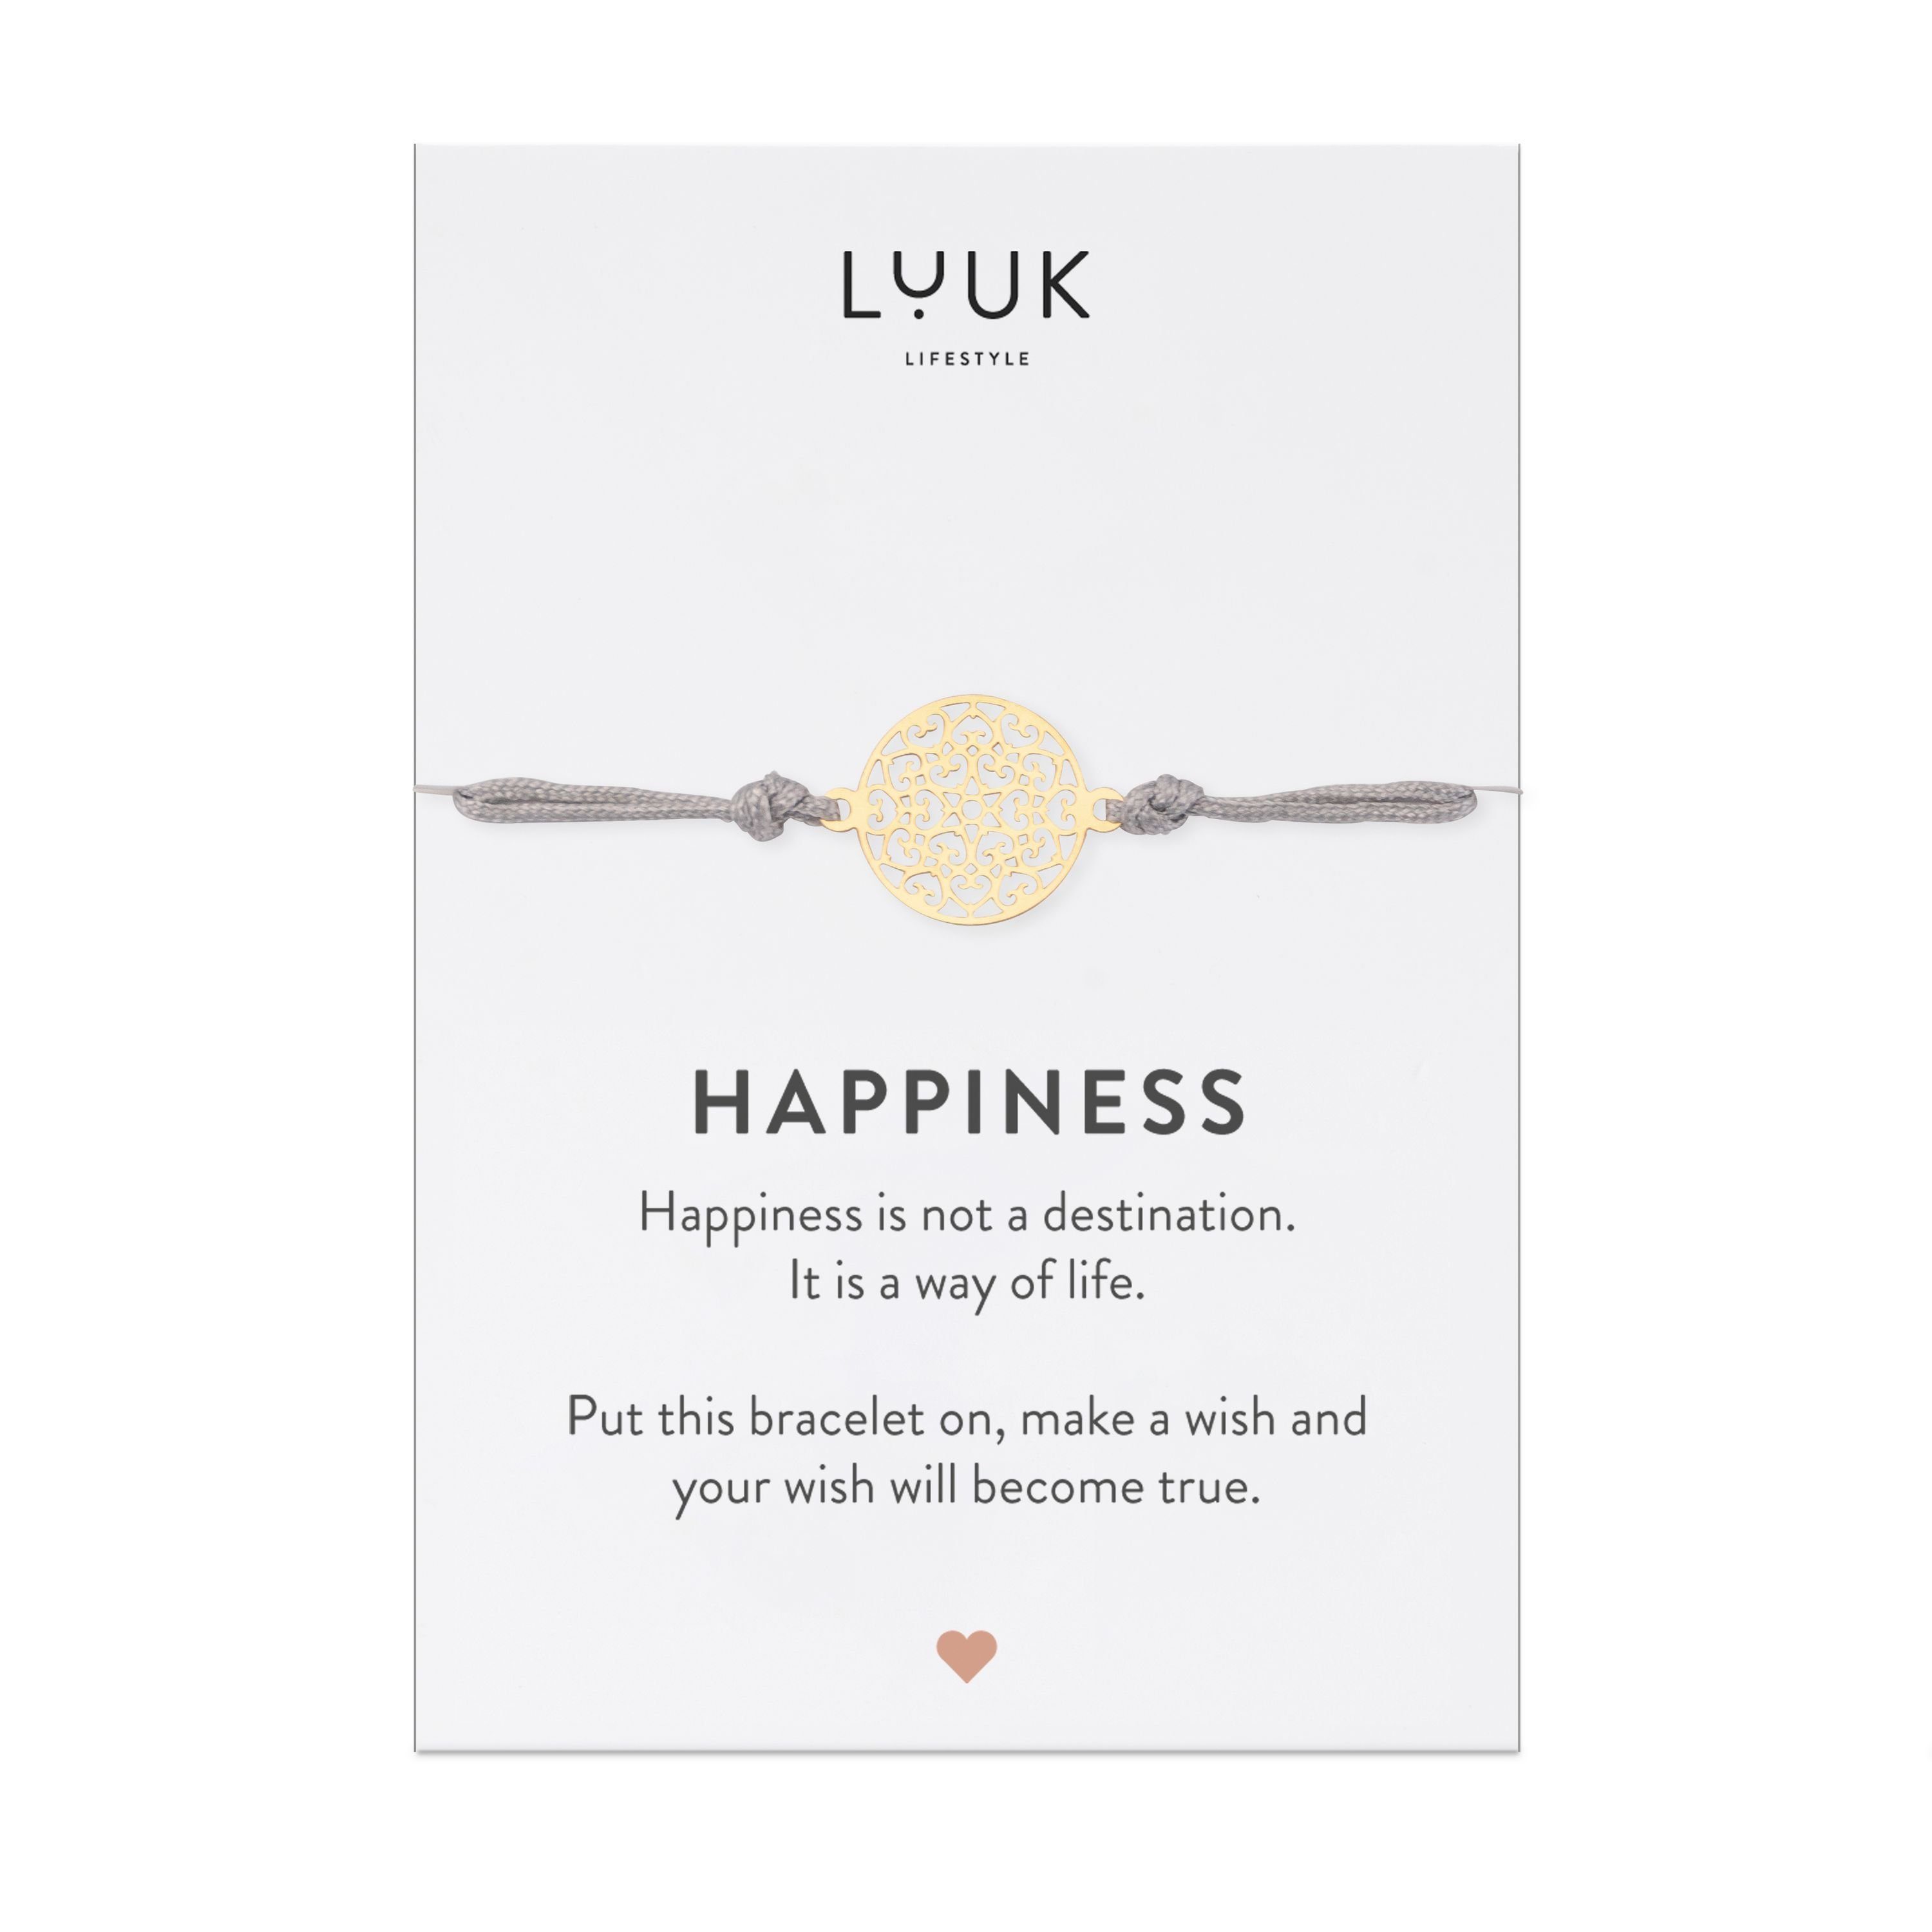 LUUK LIFESTYLE Freundschaftsarmband Lebensblume, handmade, mit Happiness Spruchkarte Gold